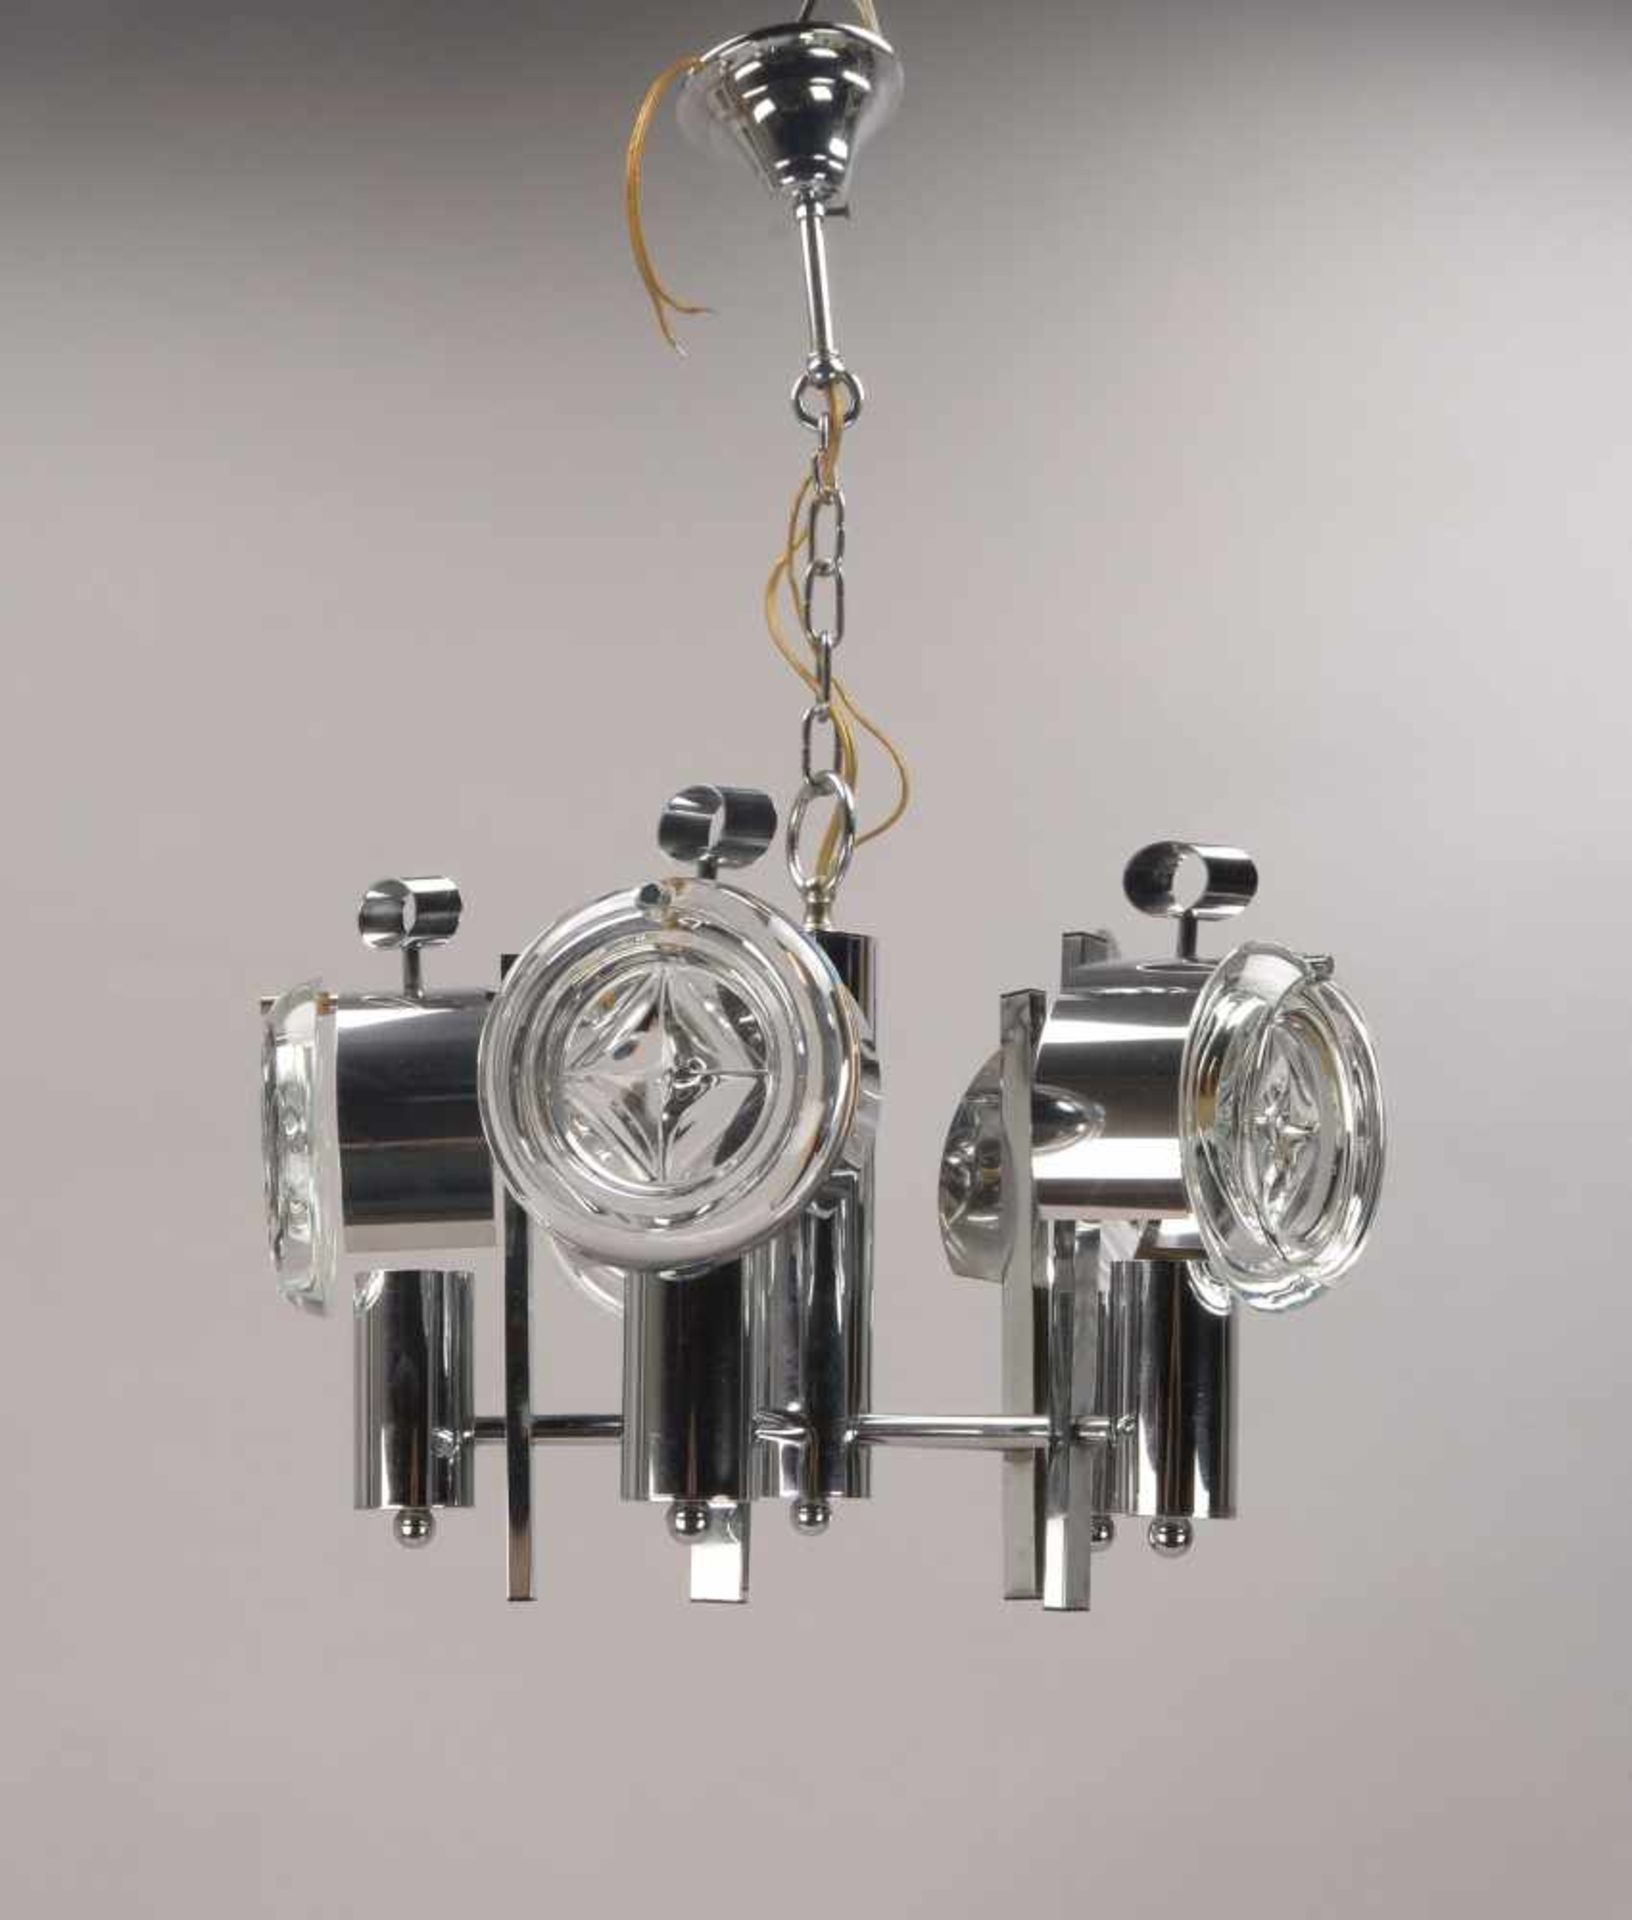 Deckenlampe, 5-flammig, Chromgestell, funktionstüchtig; Abhänghöhe 65 cm, Durchmesser Ø 45 cm